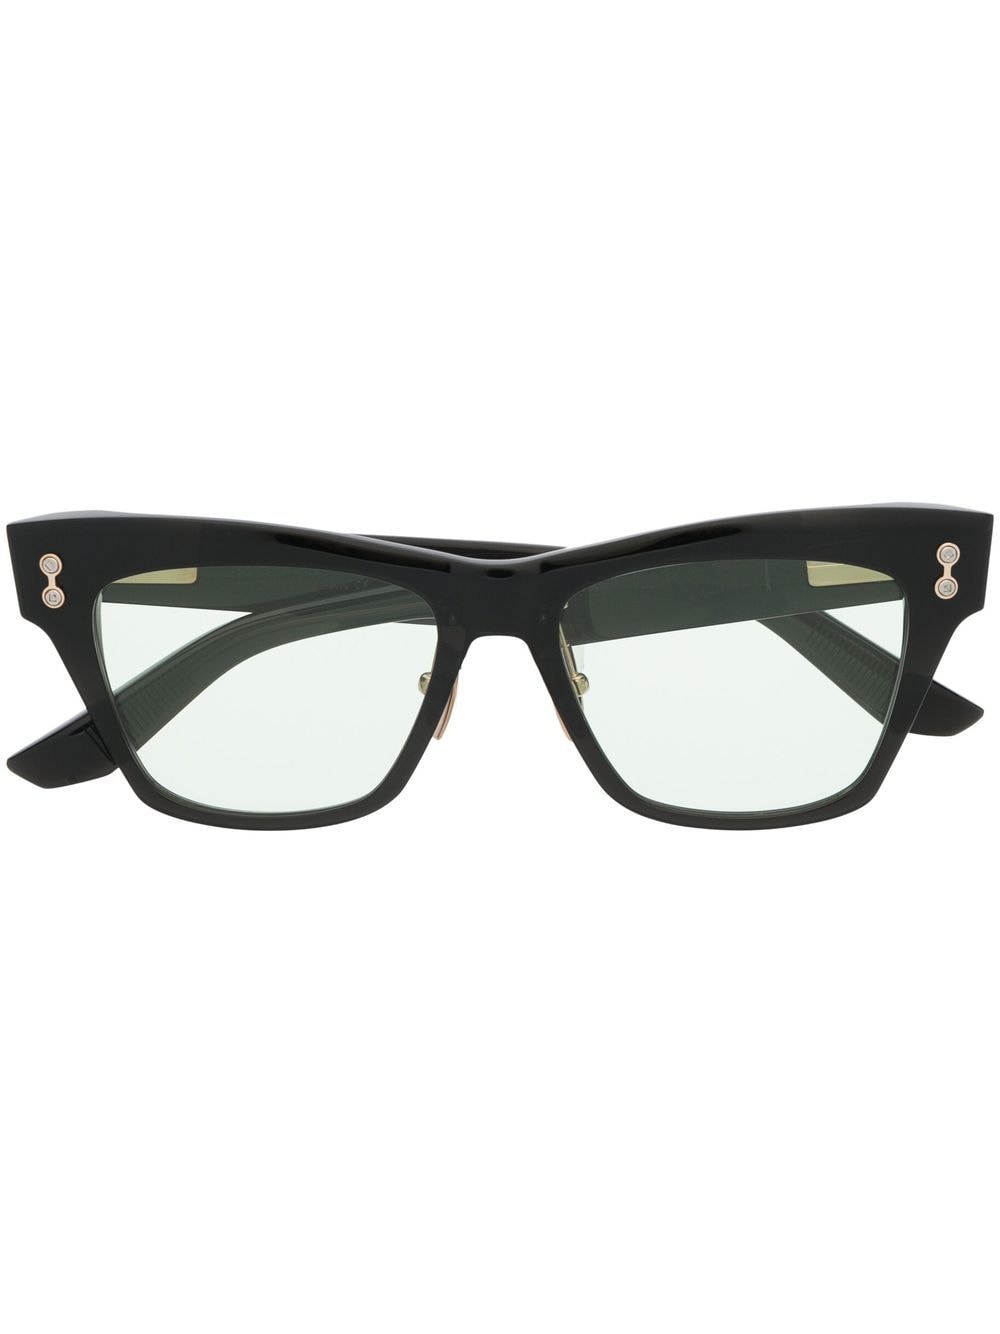 Sagitta square-frame glasses